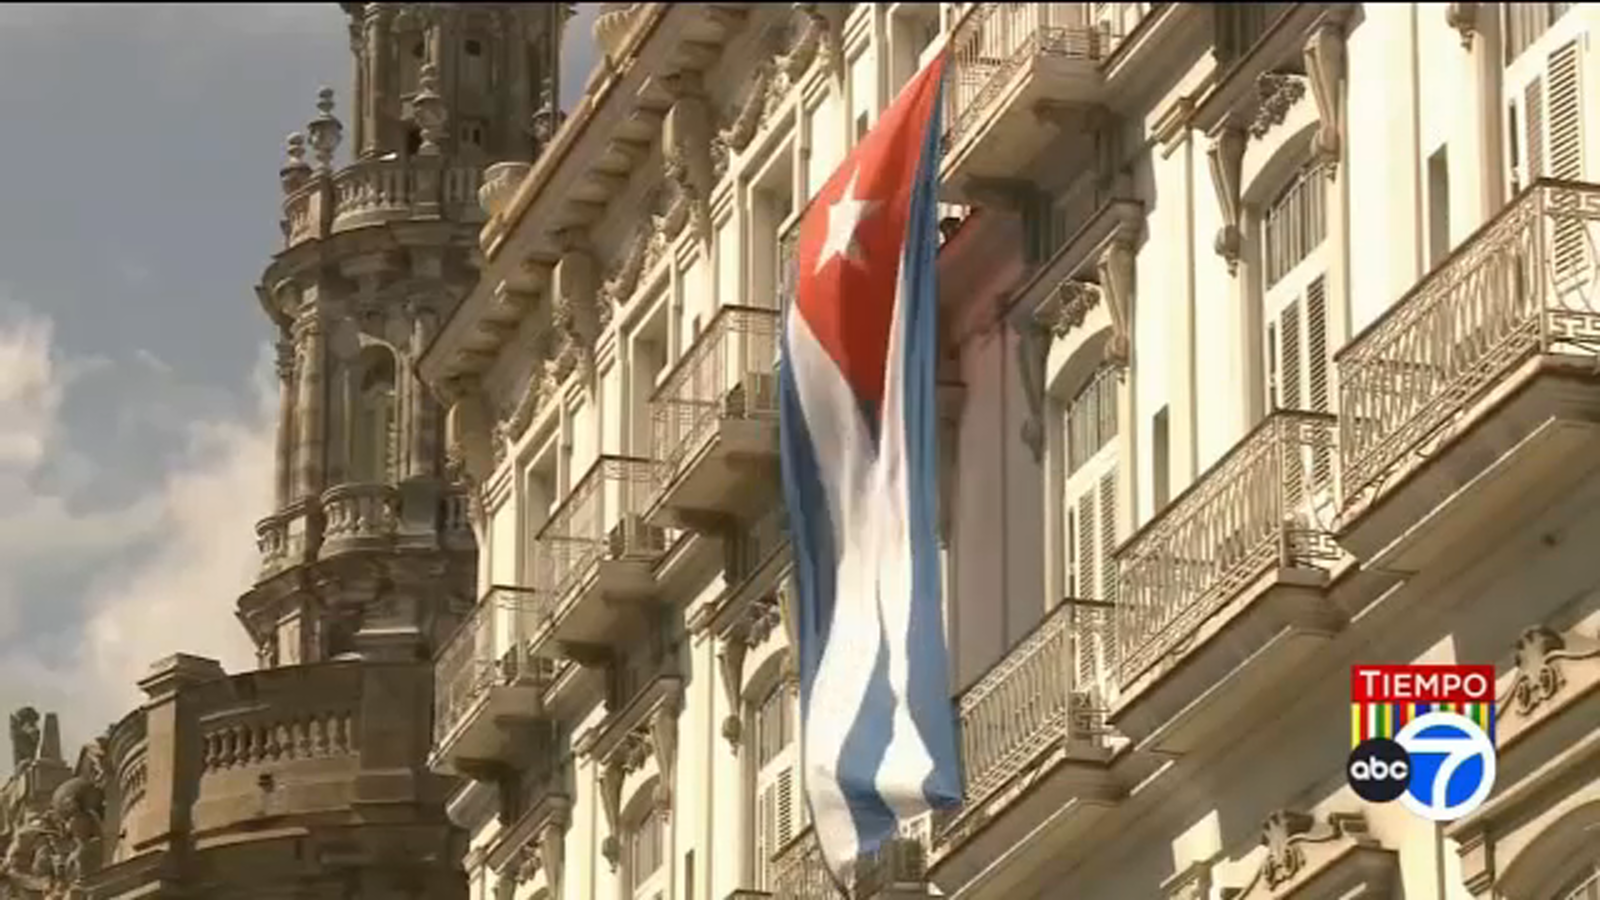 Tiempo with Joe Torres: Blackouts, lack of food deepen crisis in Cuba [Video]